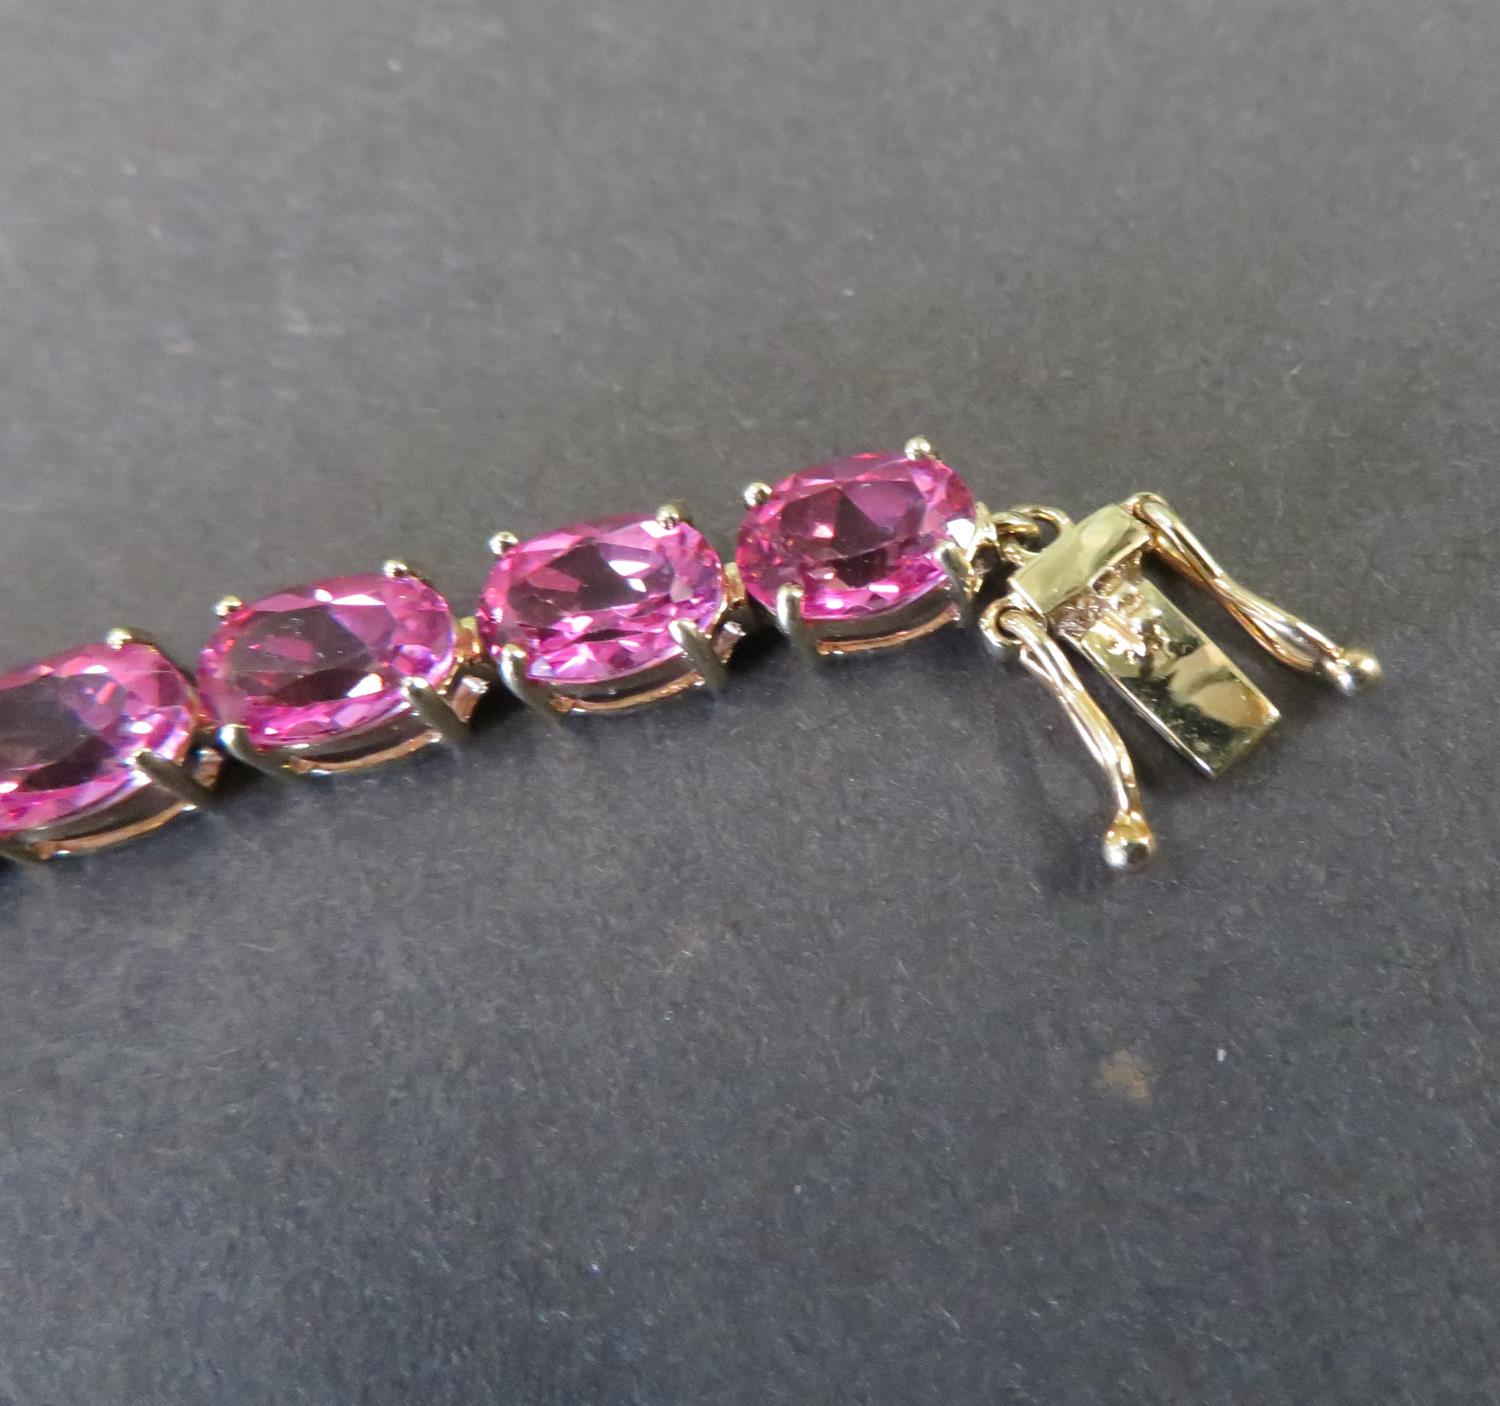 9ct tennis bracelet - unknown pink stones - Image 3 of 3